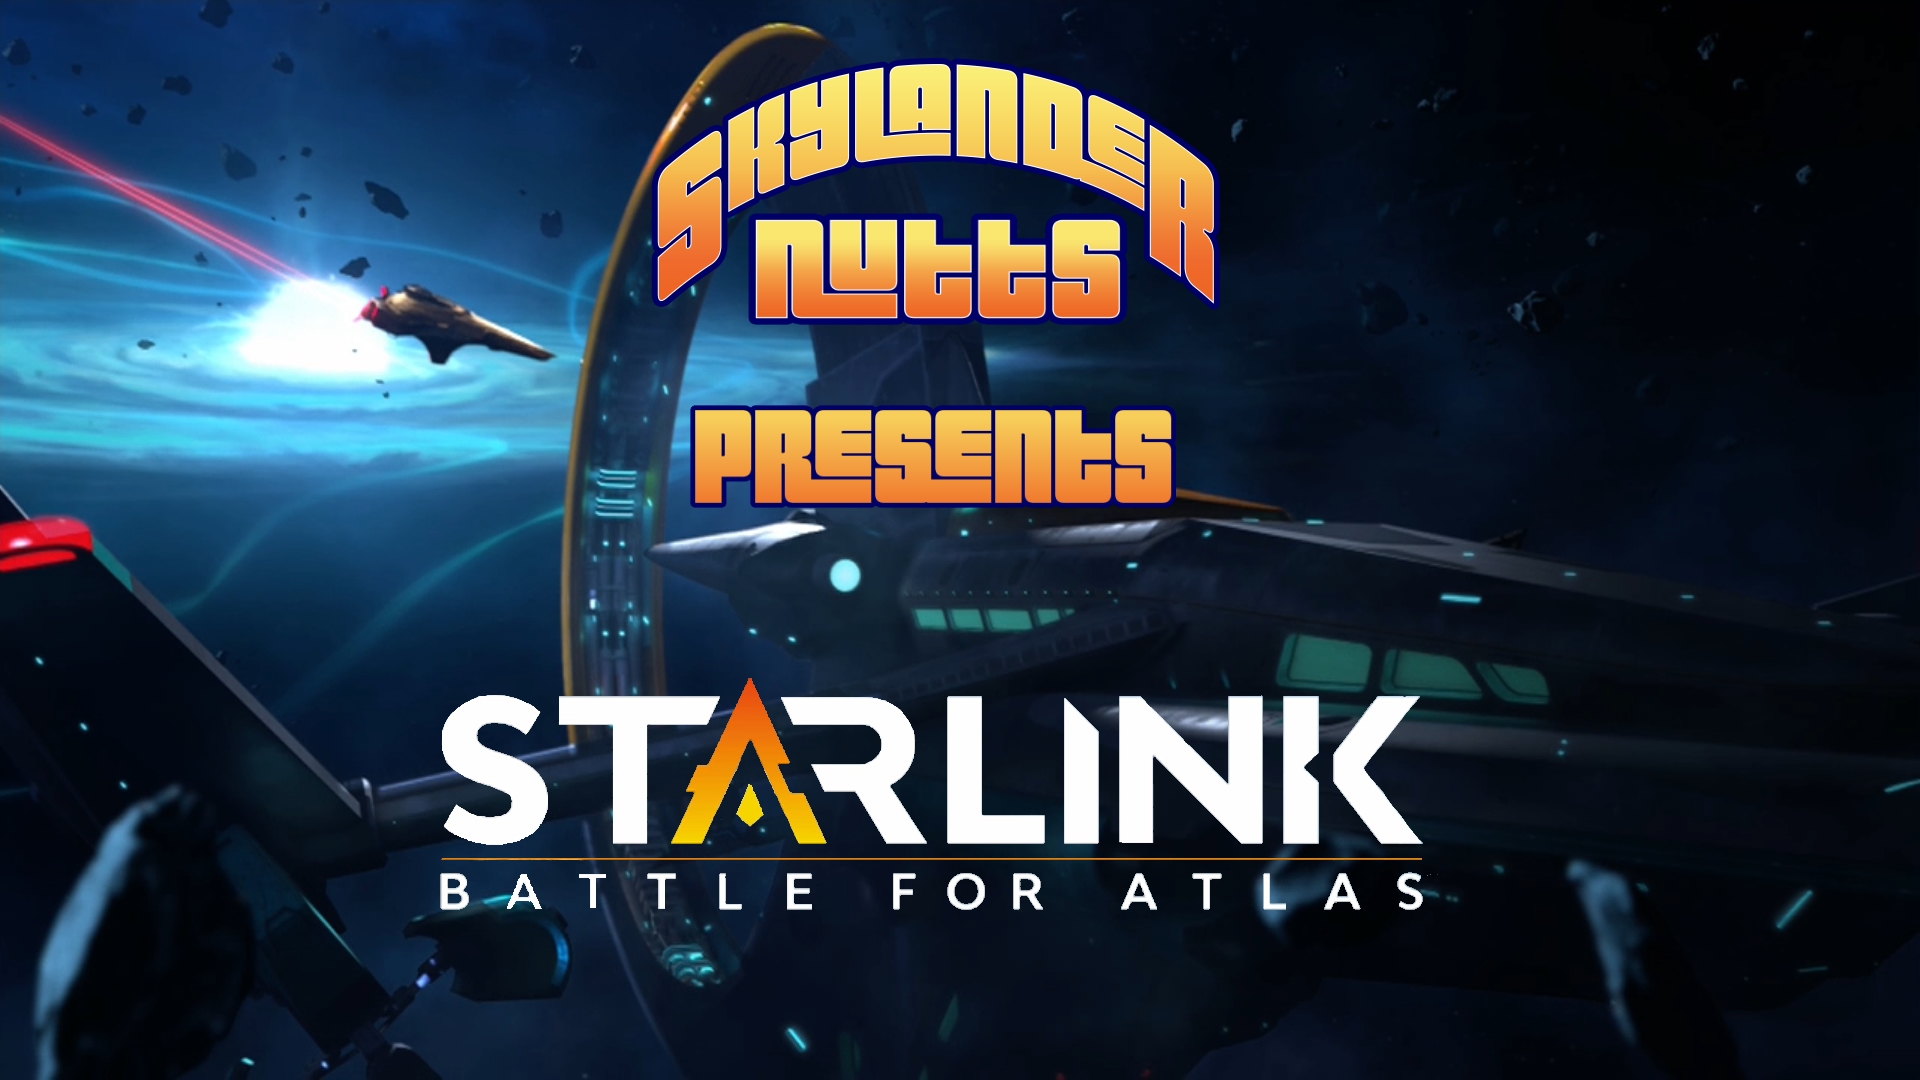 SkylanderNutts Presents Starlink Battle for Atlas